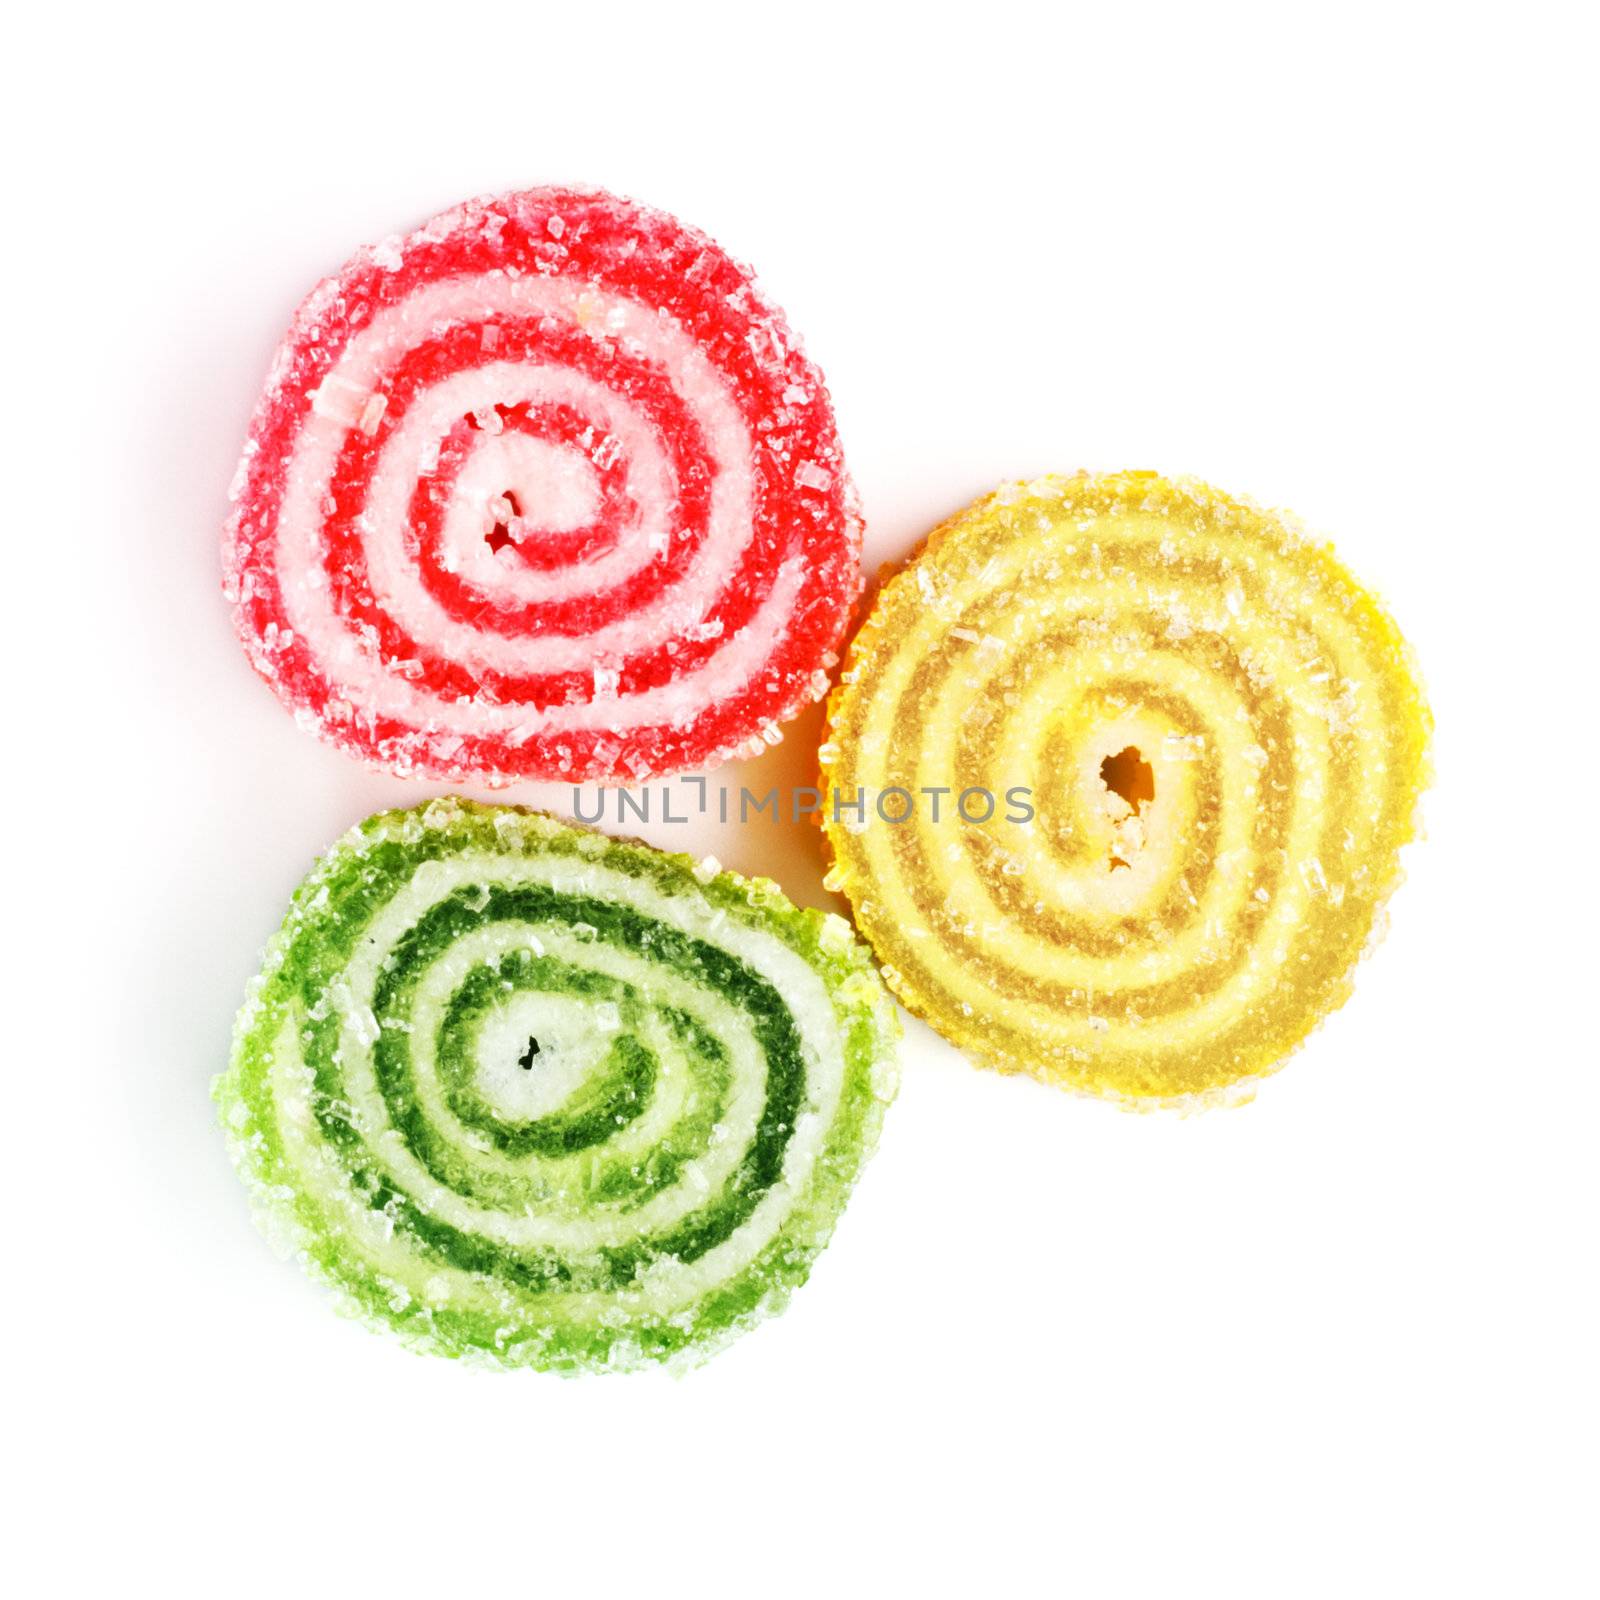 Spiral Gelatin Sweets by petr_malyshev